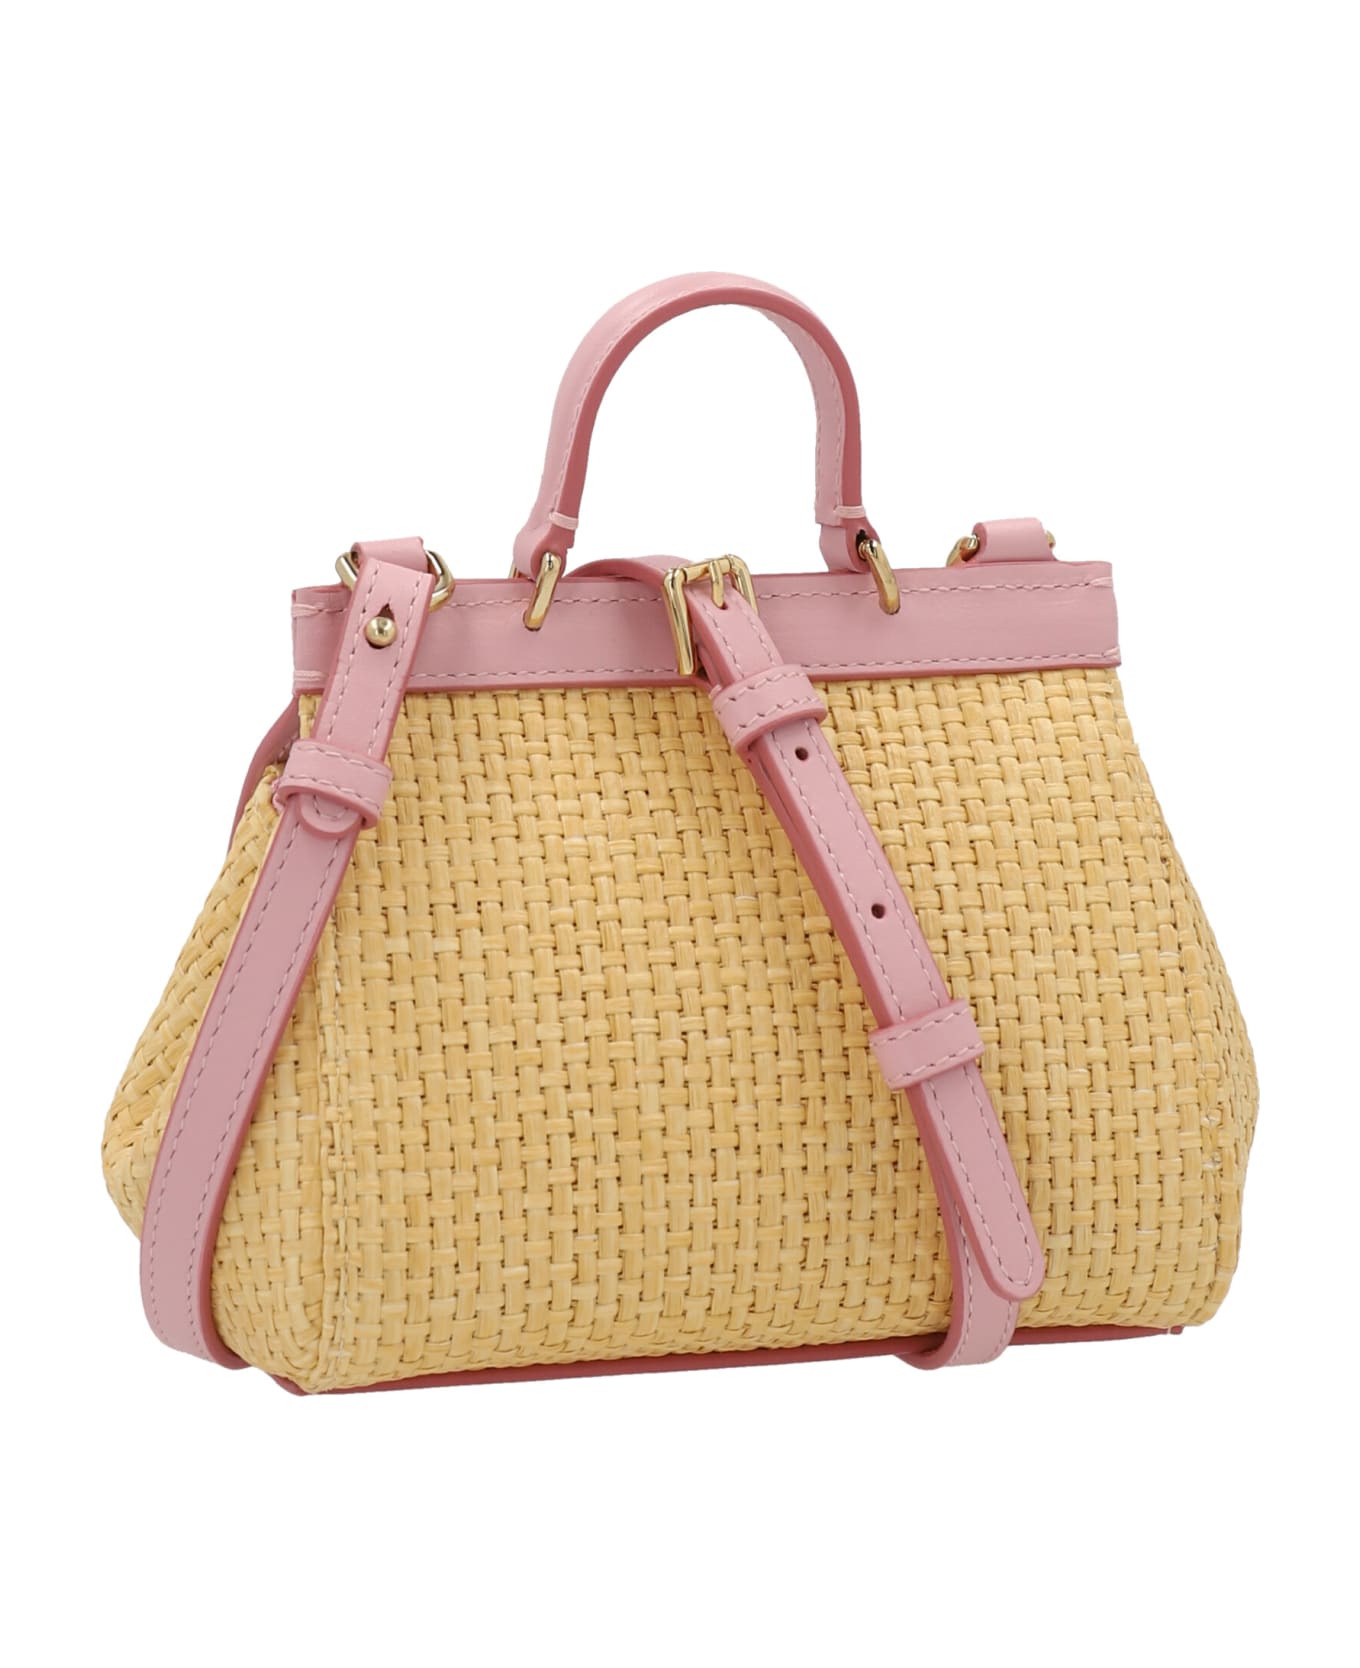 Dolce & Gabbana 'miss Sicily' Handbag - Rosa Confetto